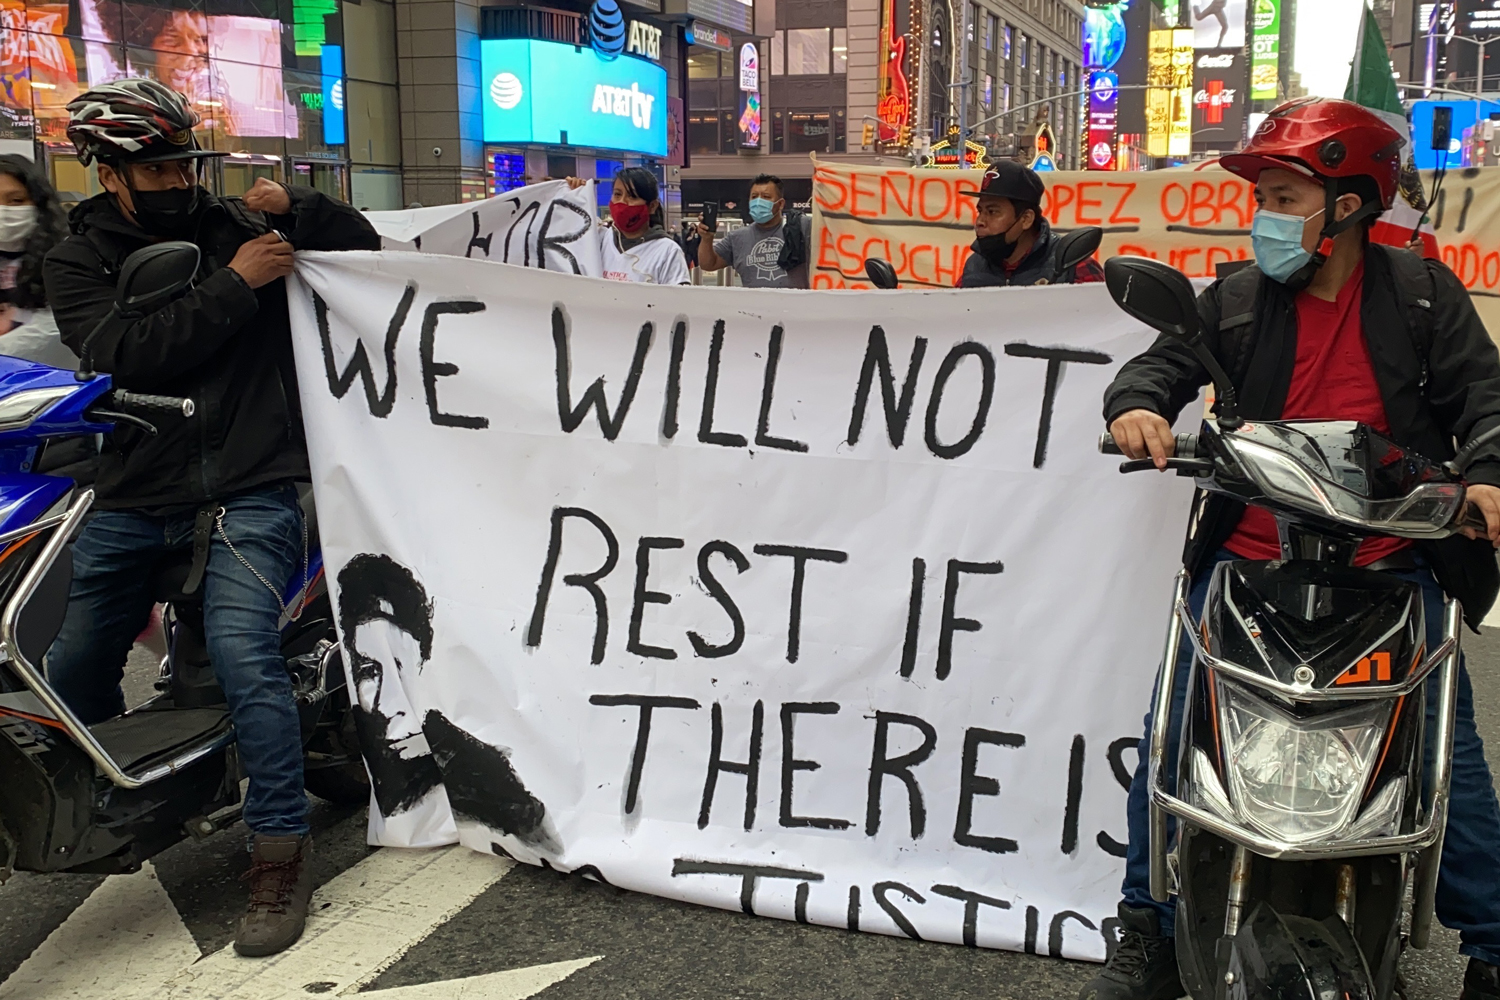 Los Deliveristas Unidos protest in Times Square on April 21.